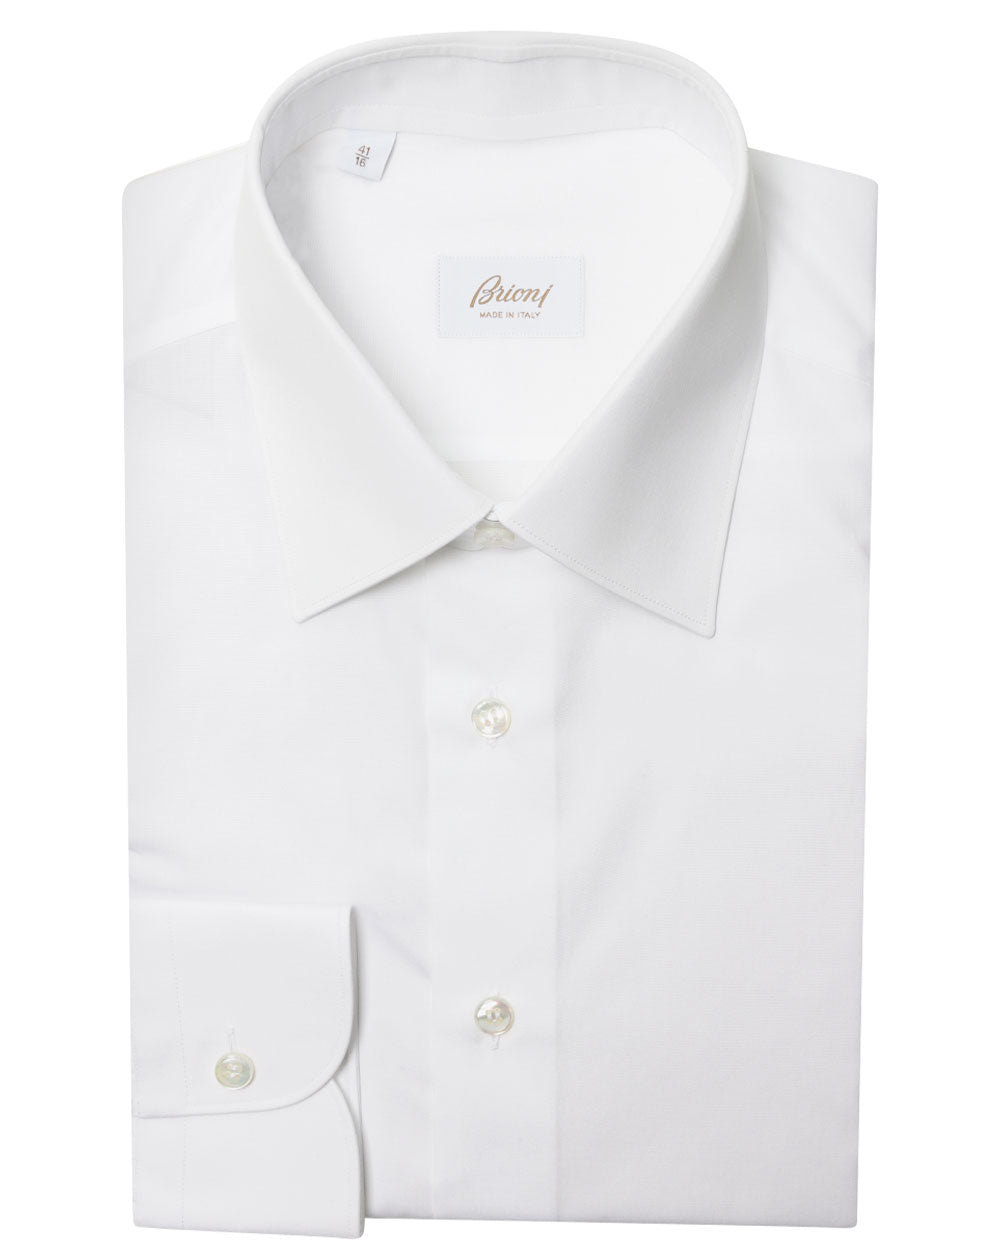 Solid White Cotton Dress Shirt